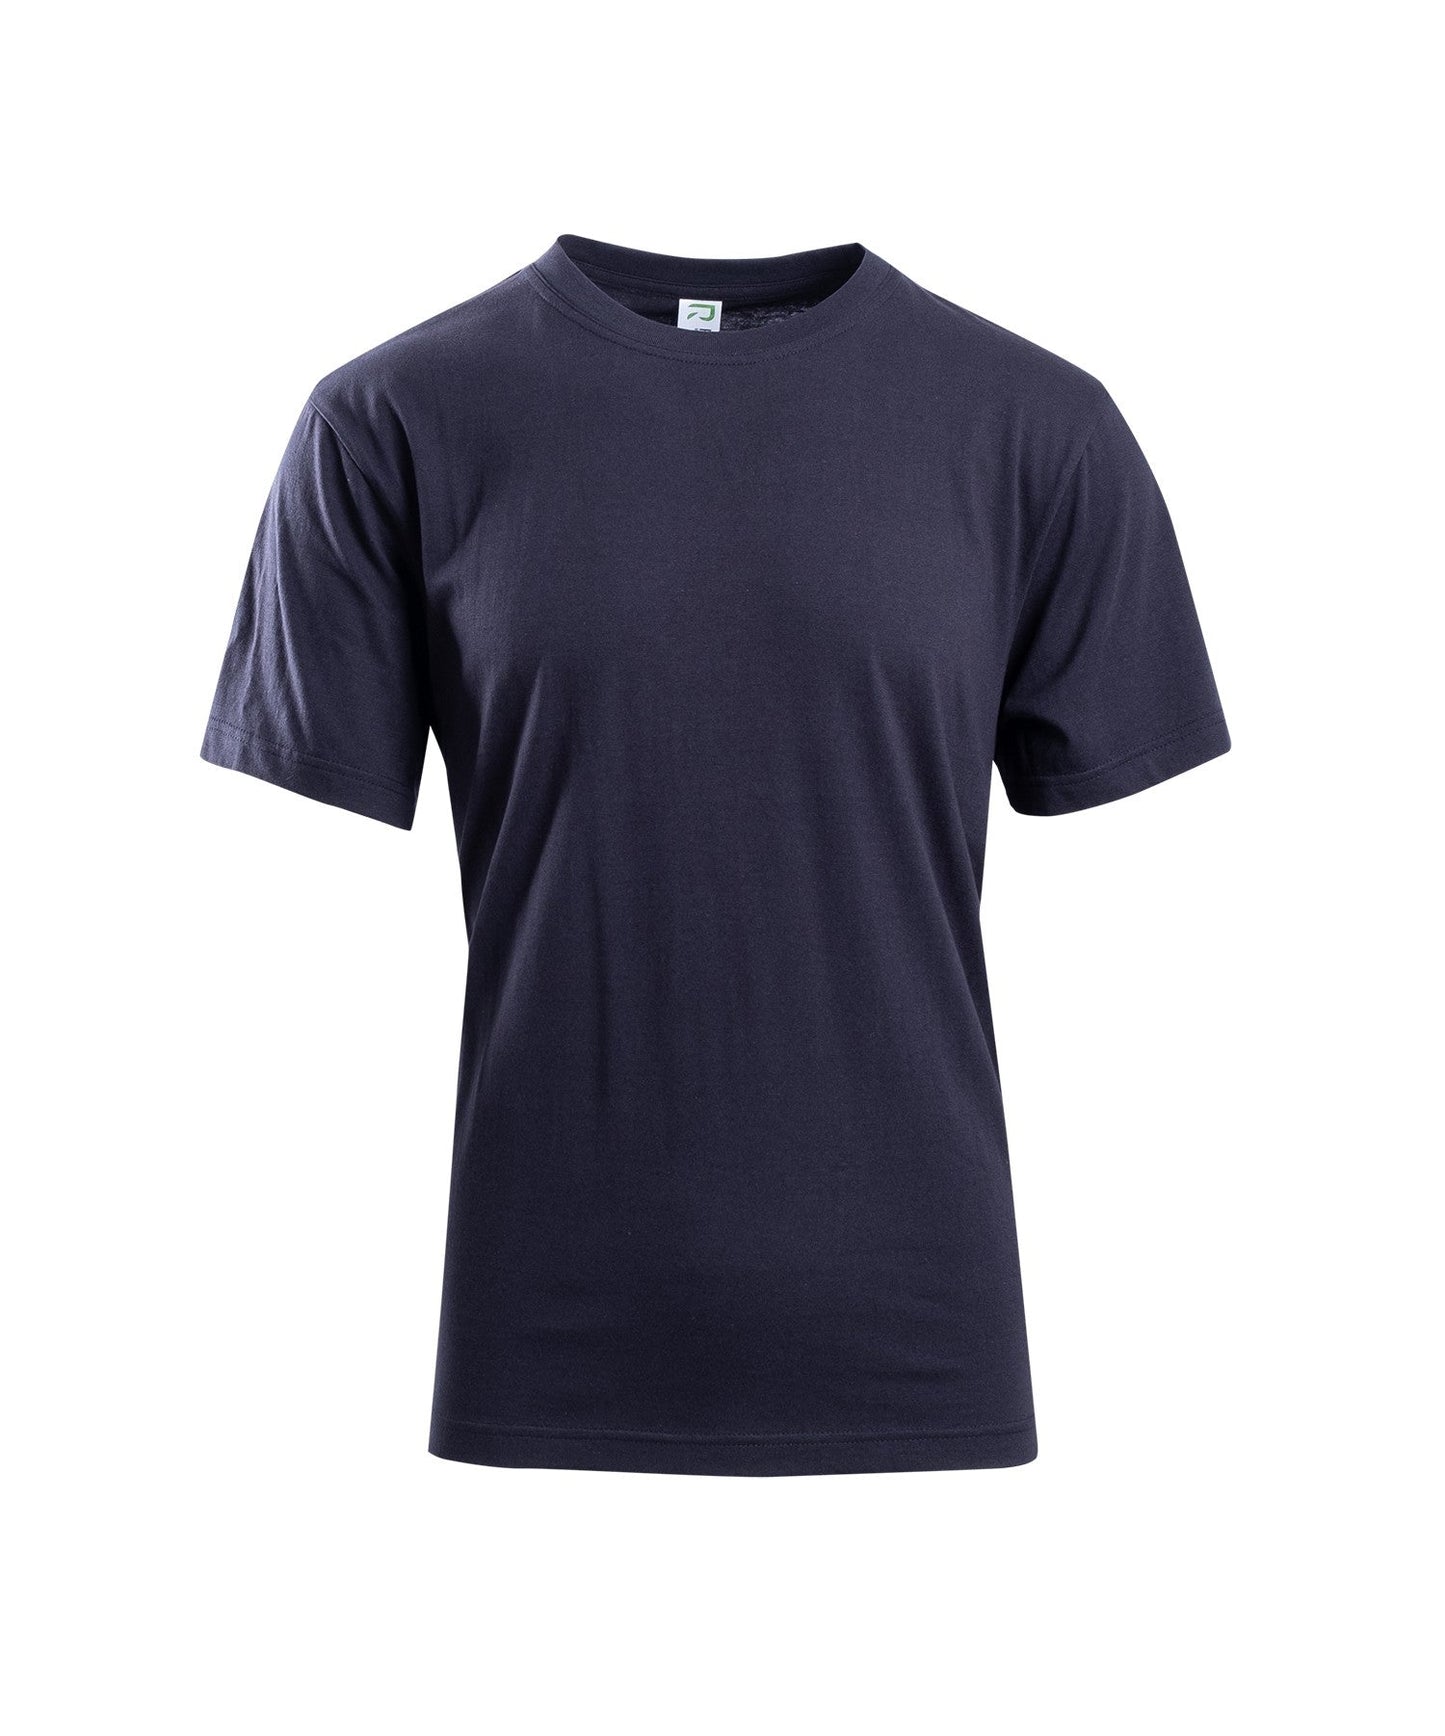 RAMO "Hype" T-Shirt - Minimum Order 20